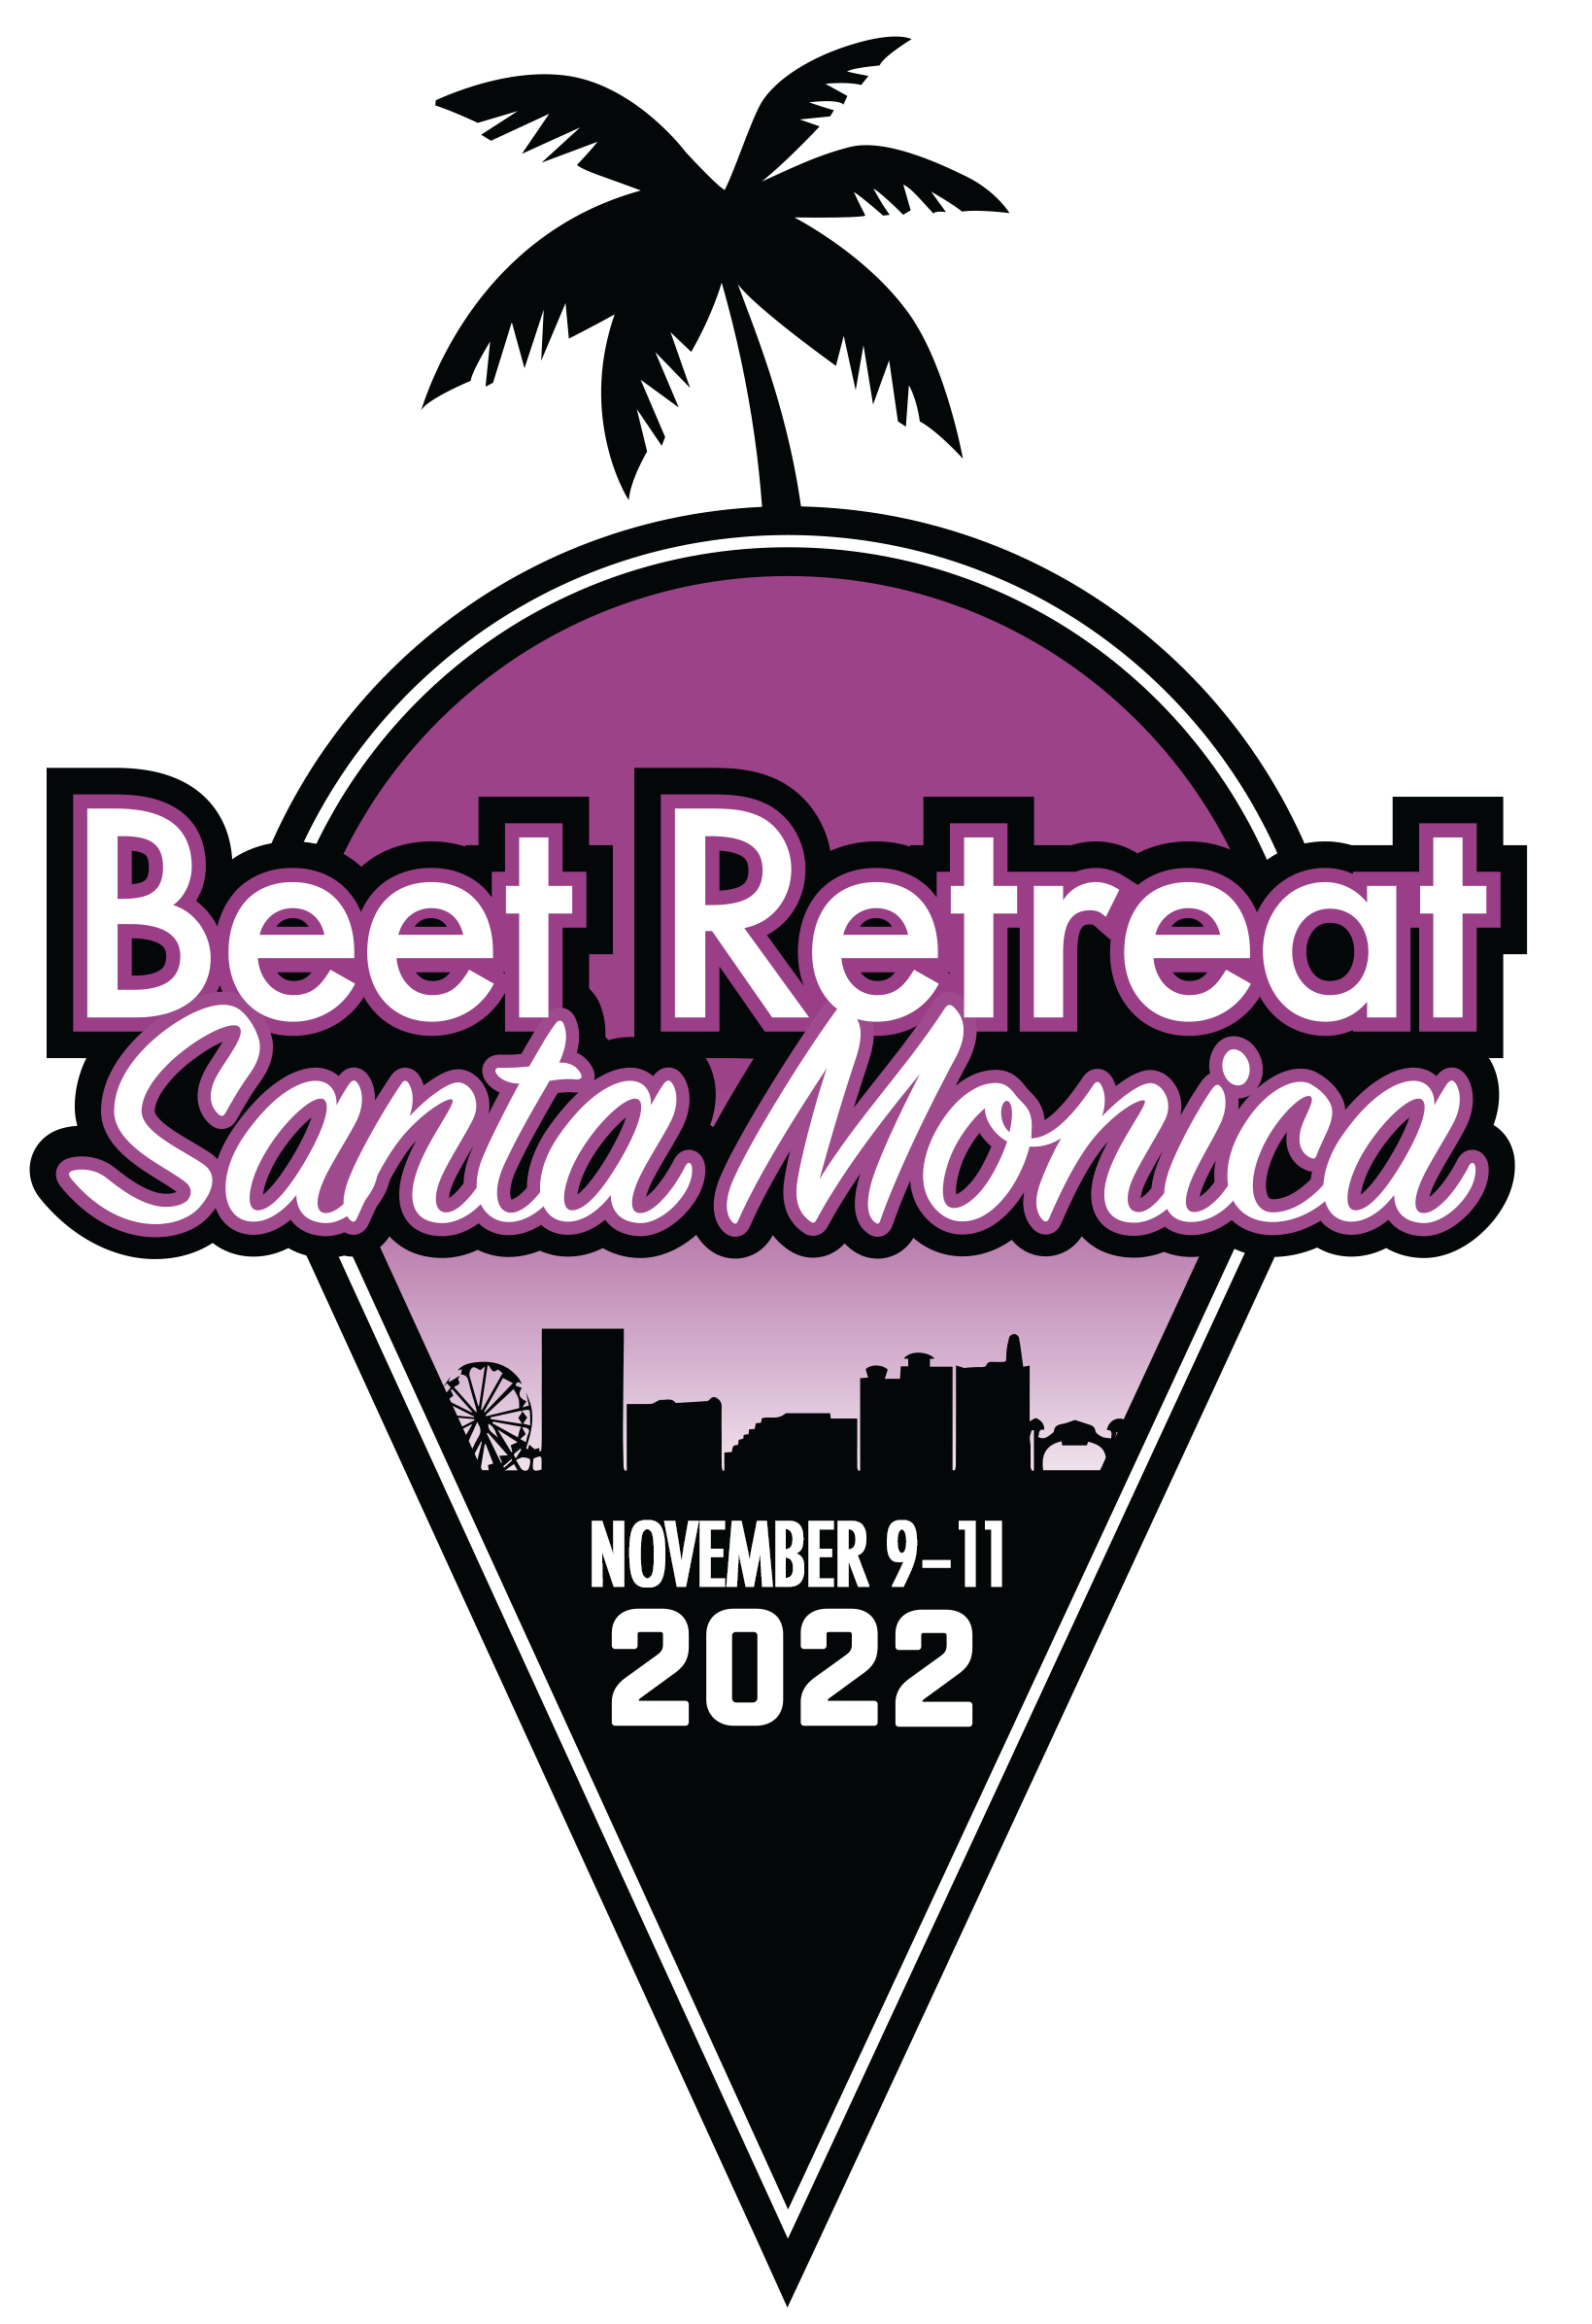 Beet Retreat Santa Monica 2022